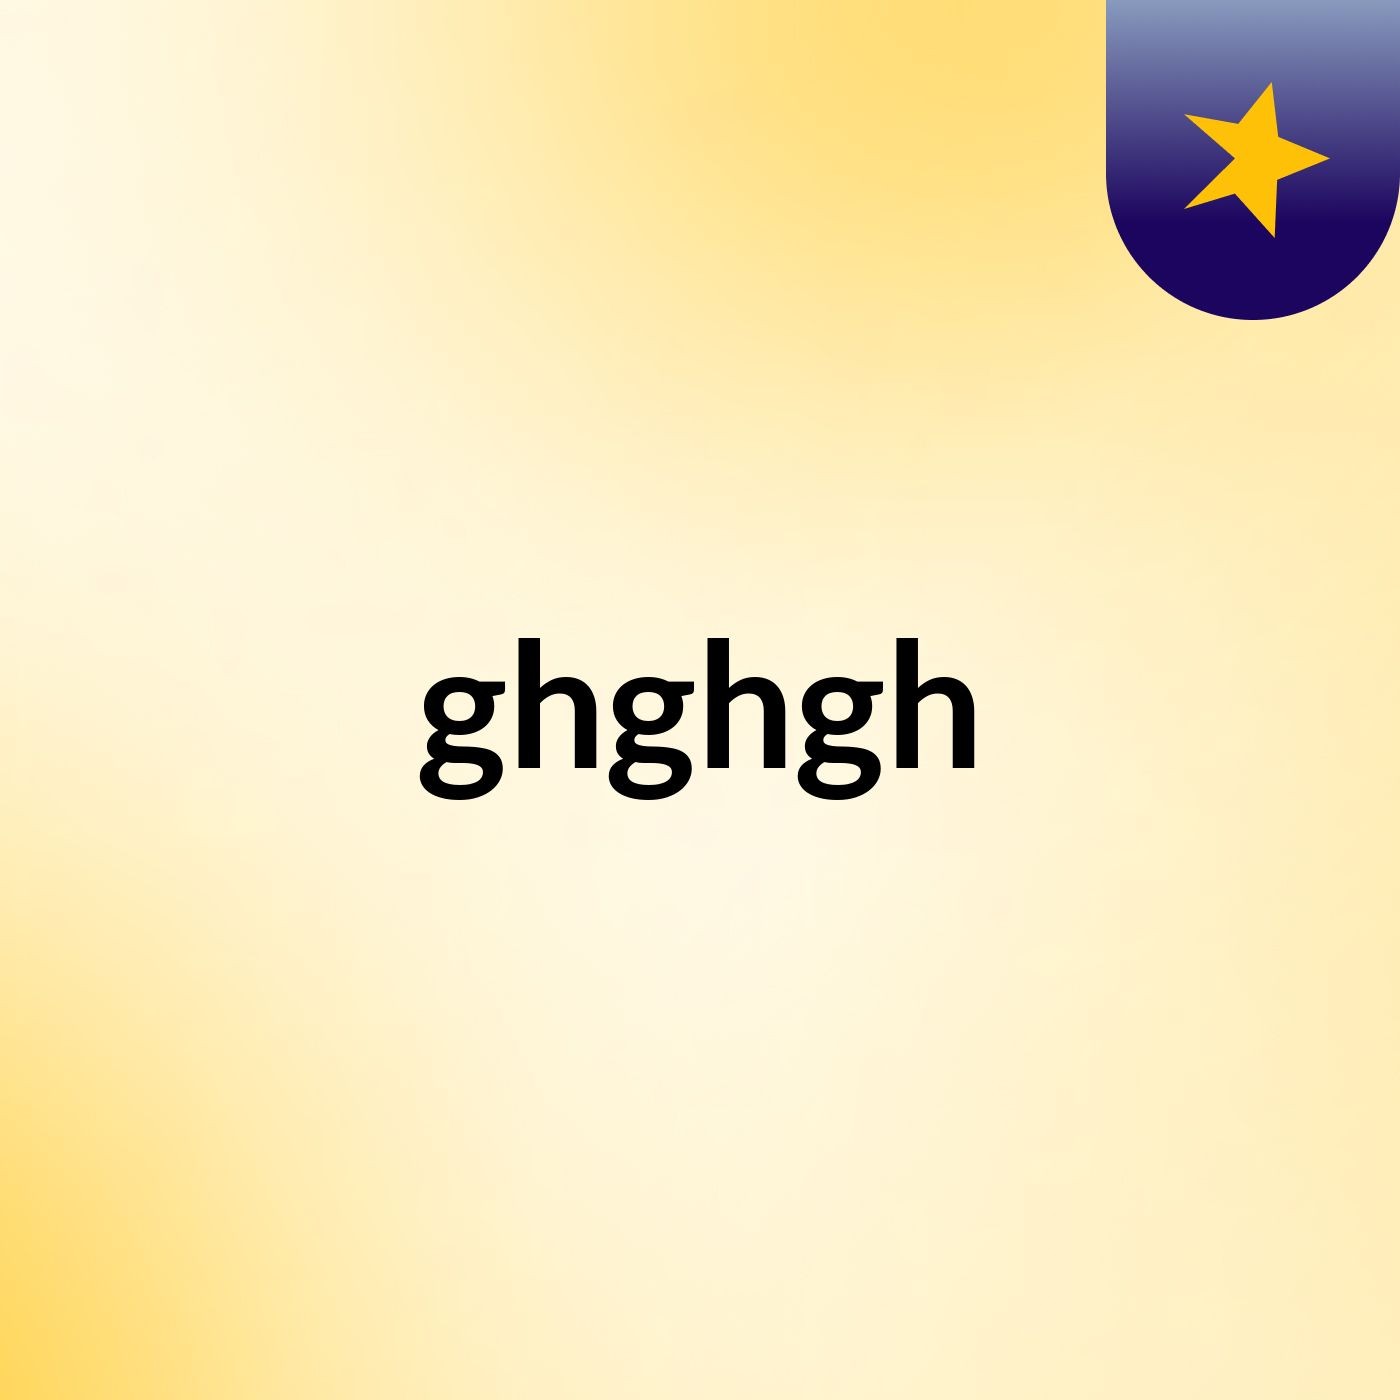 ghghgh